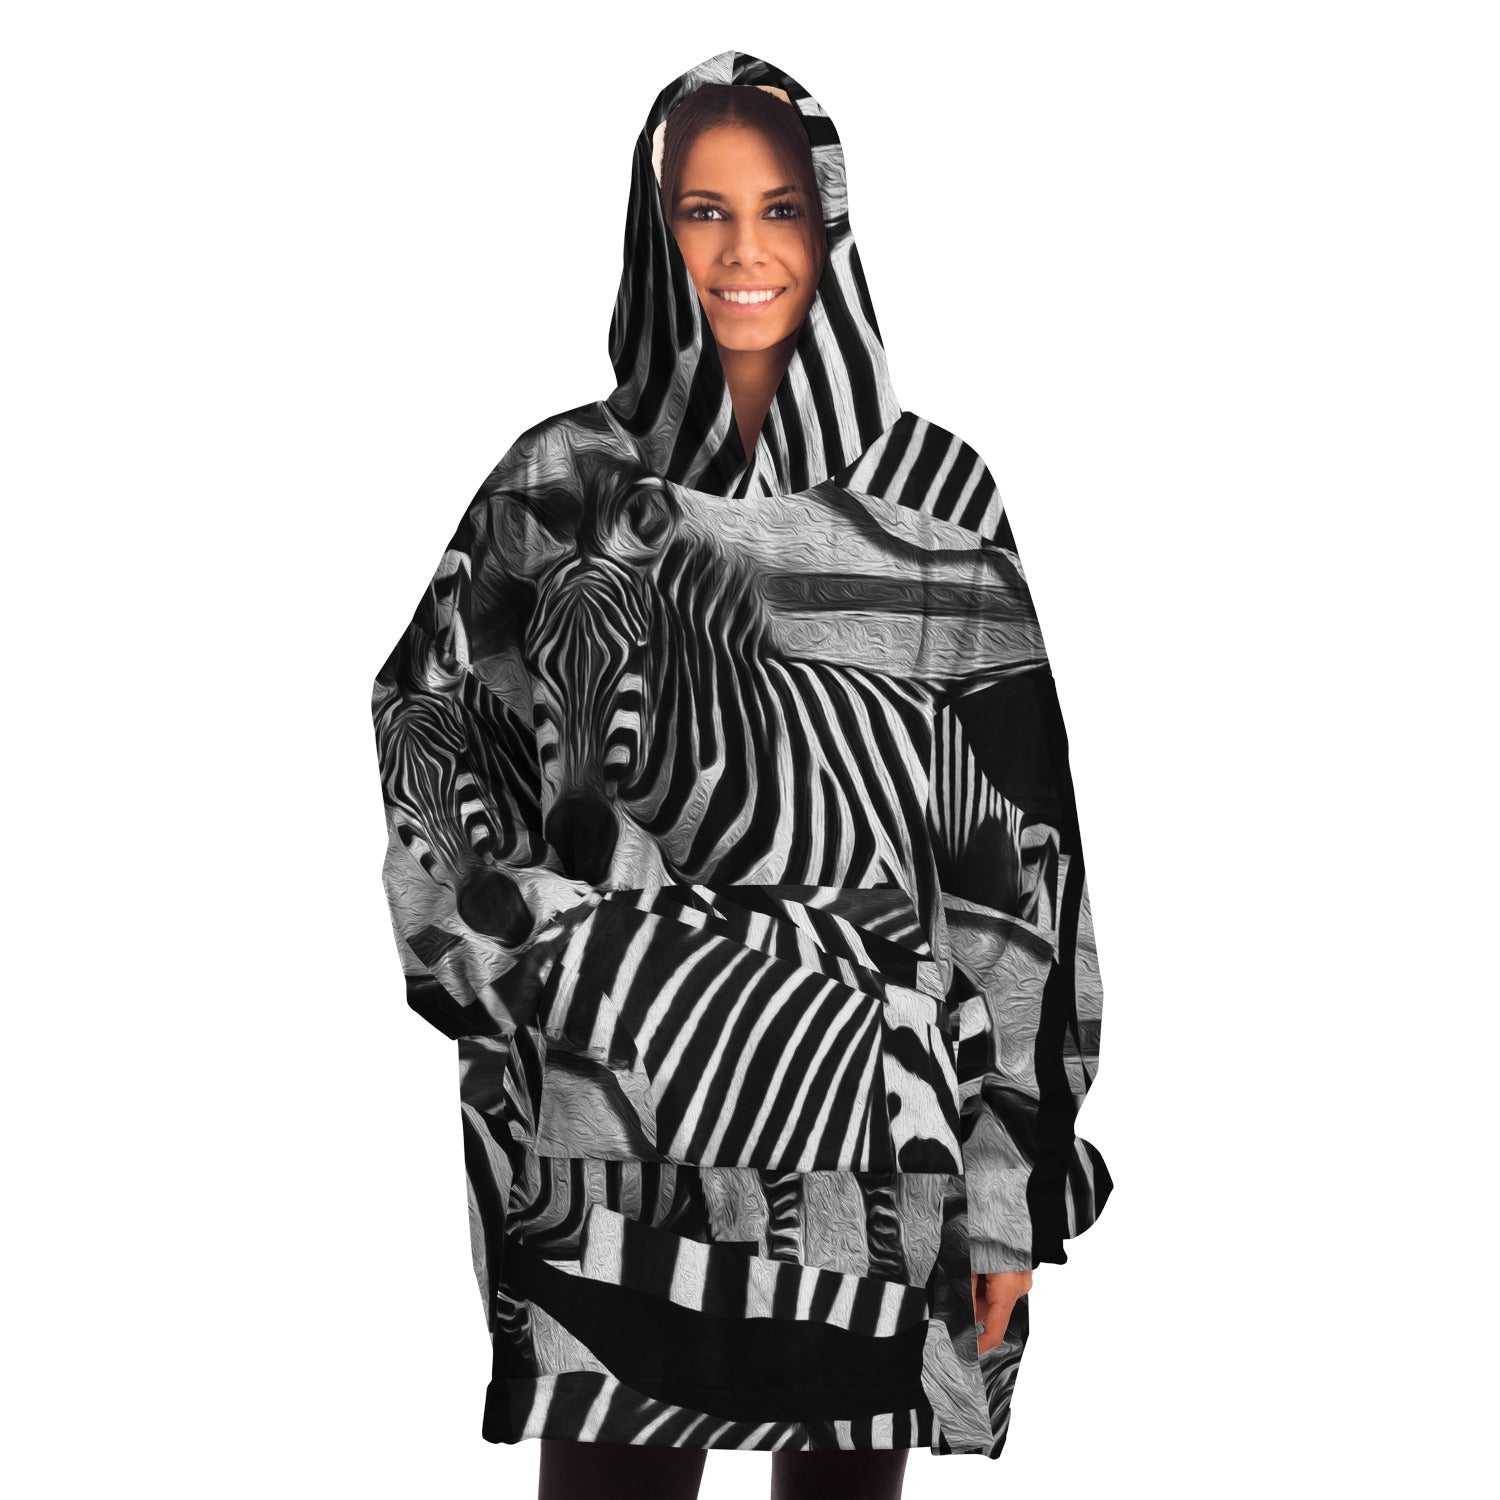 Zebra Artwork Snug Hoodie Gift Idea HOO-DESIGN.SHOP